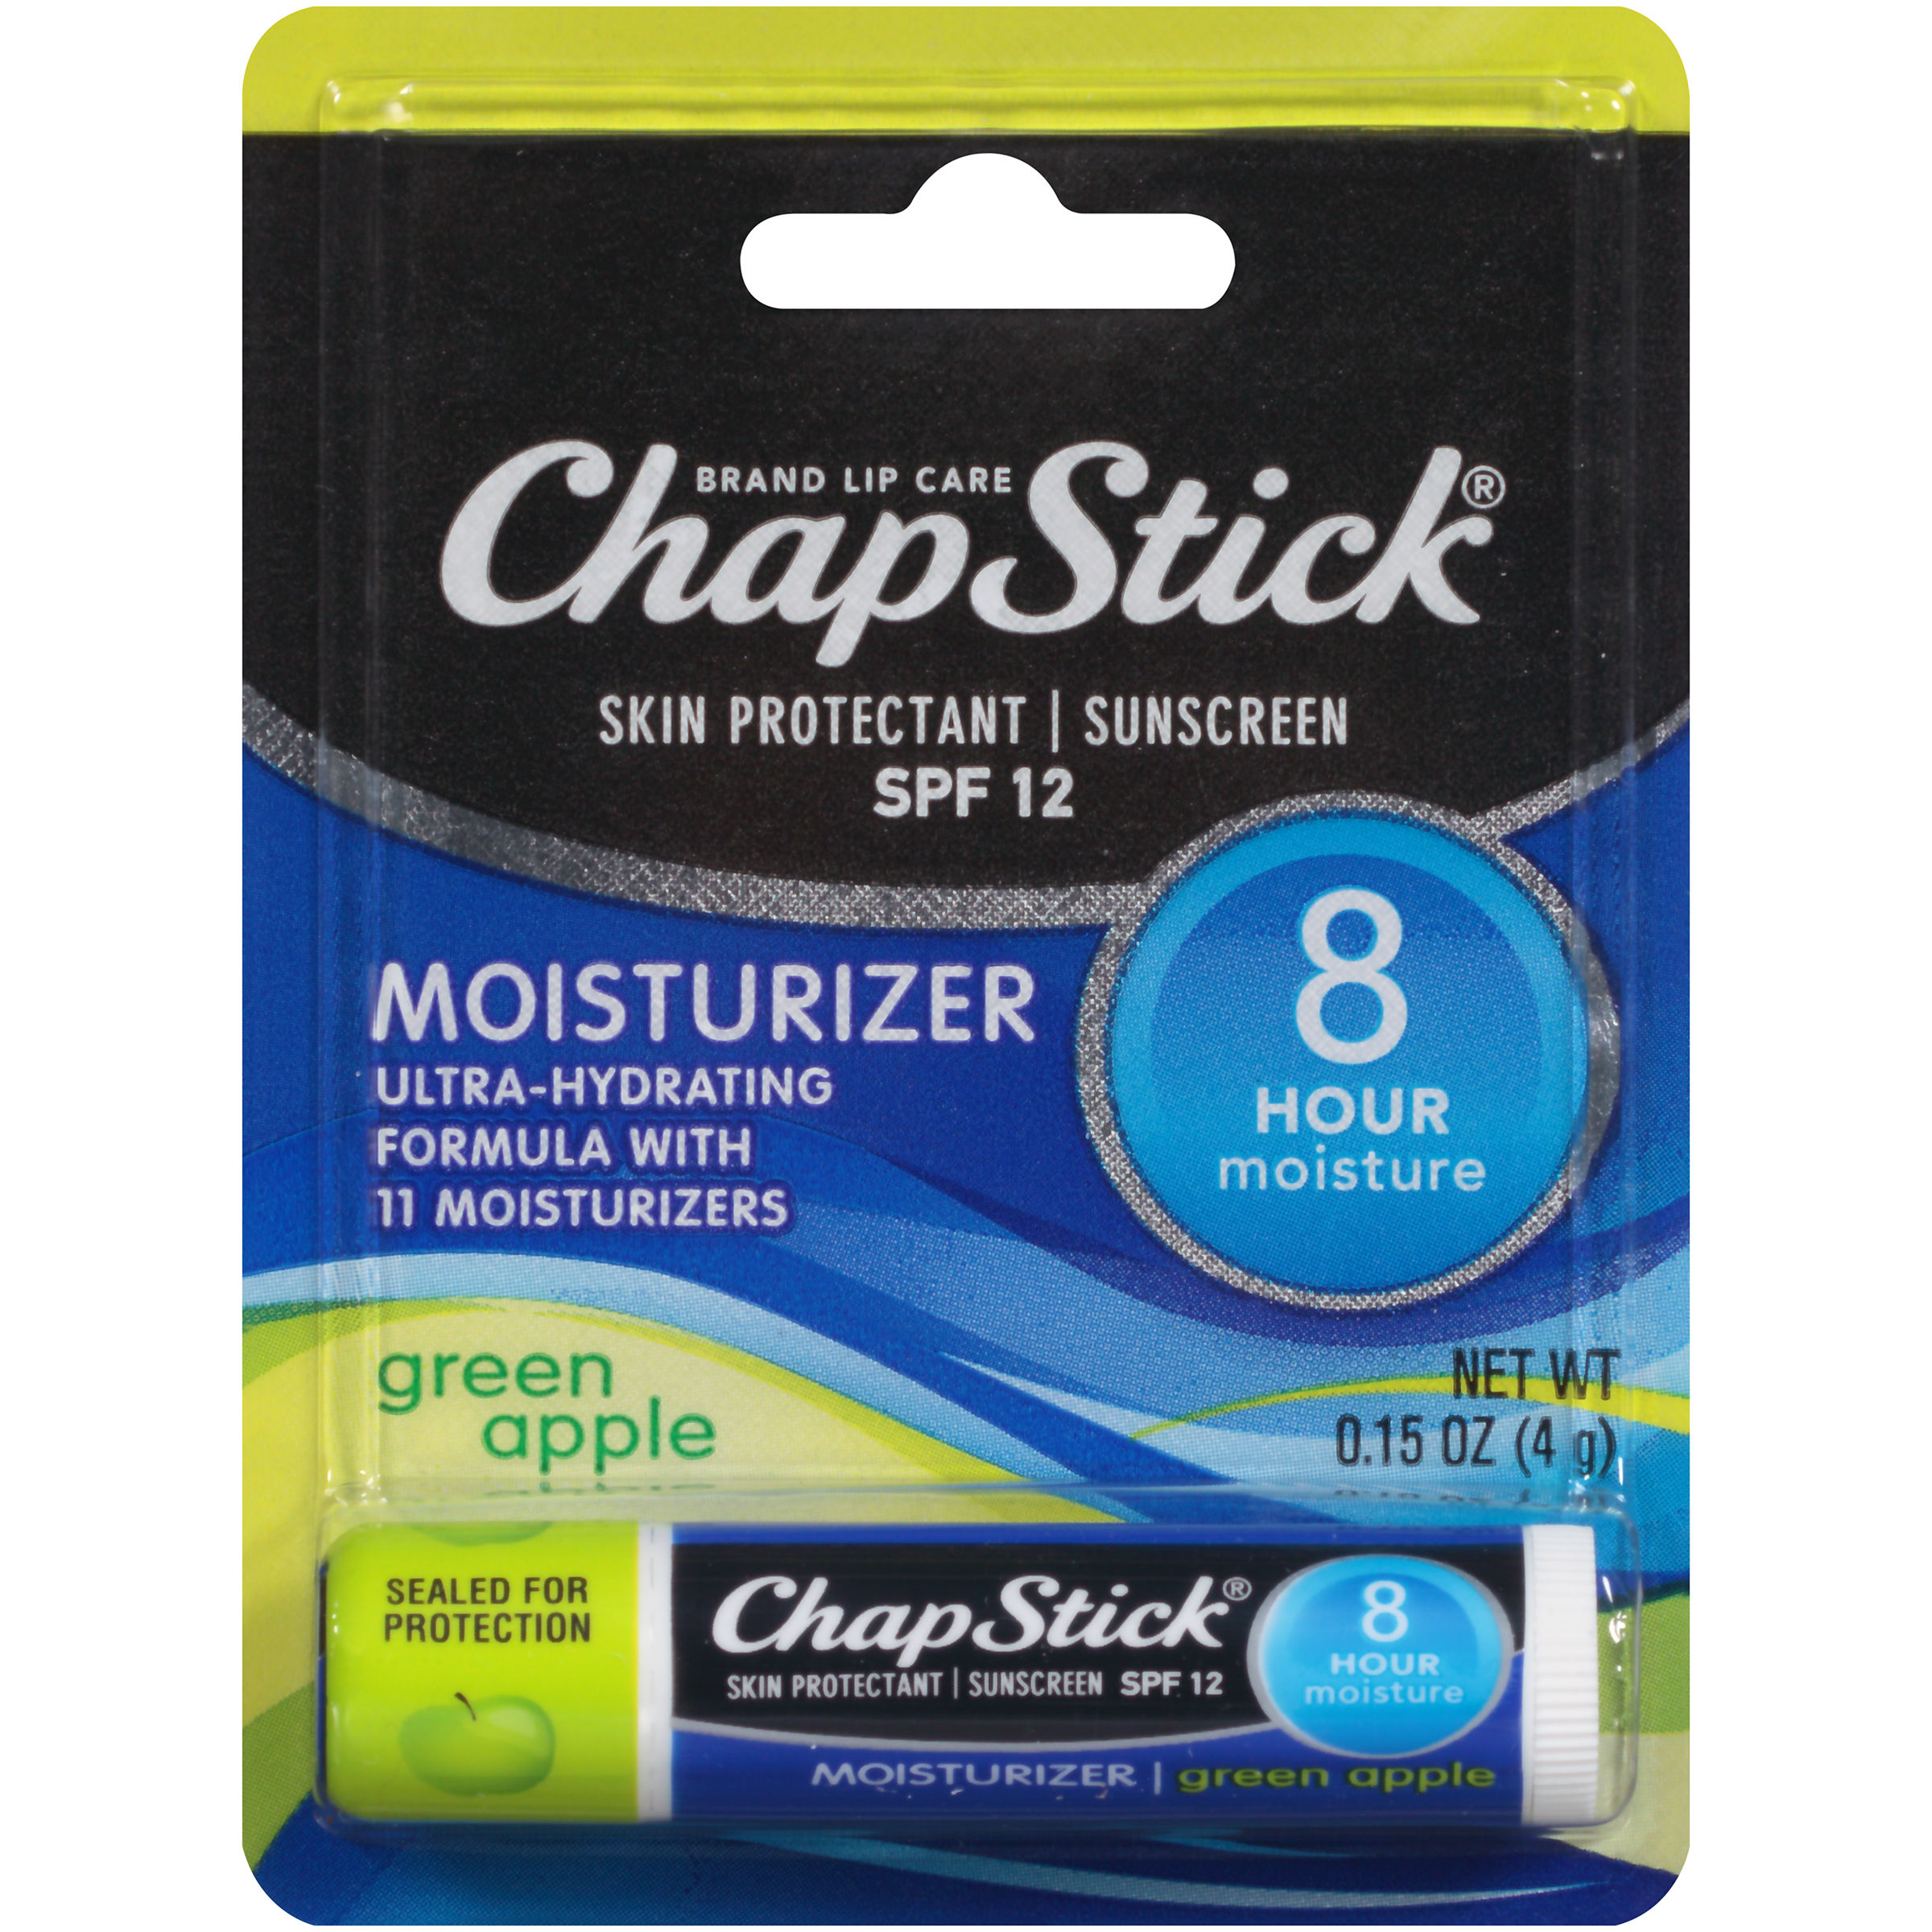 ChapStick Skin Protectant Lip Balm, Green Apple, SPF 15